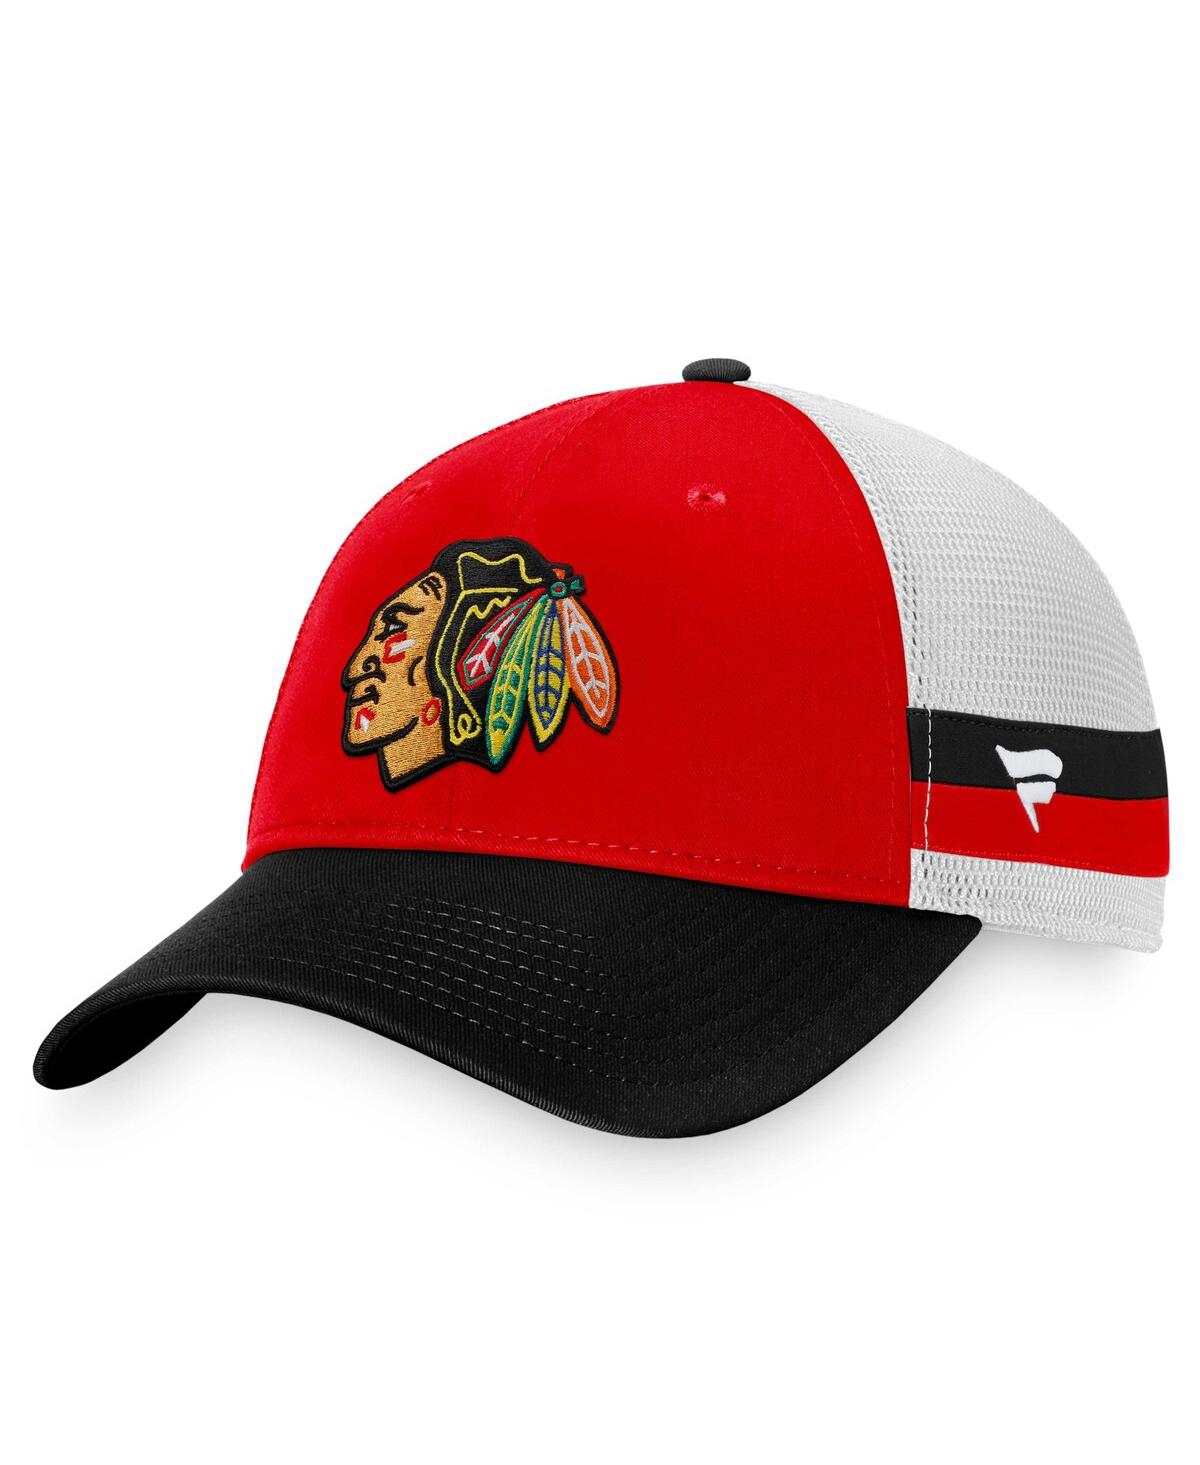 NHL Fanatics Branded Original Six Fitted Hat - Black/Gold